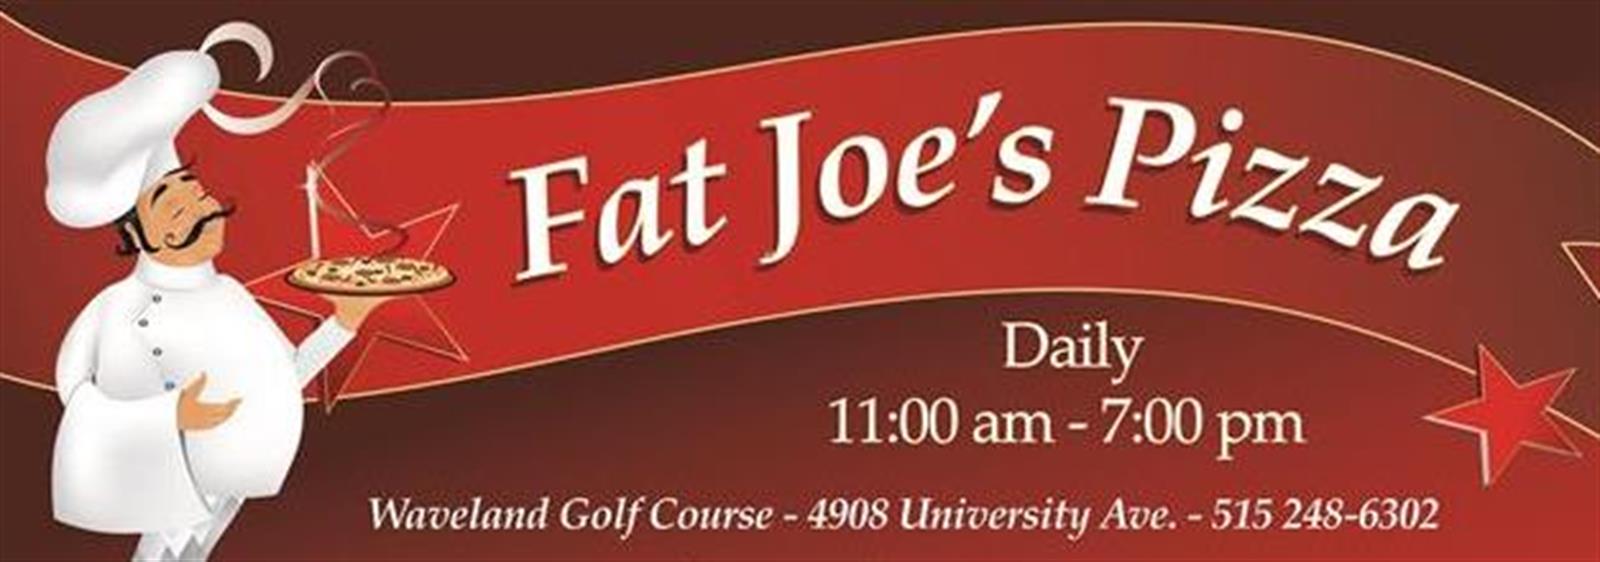 Waveland-Golf-Course_Fat-Joes-Pizza_Fat-Joes-Pizza-Menu